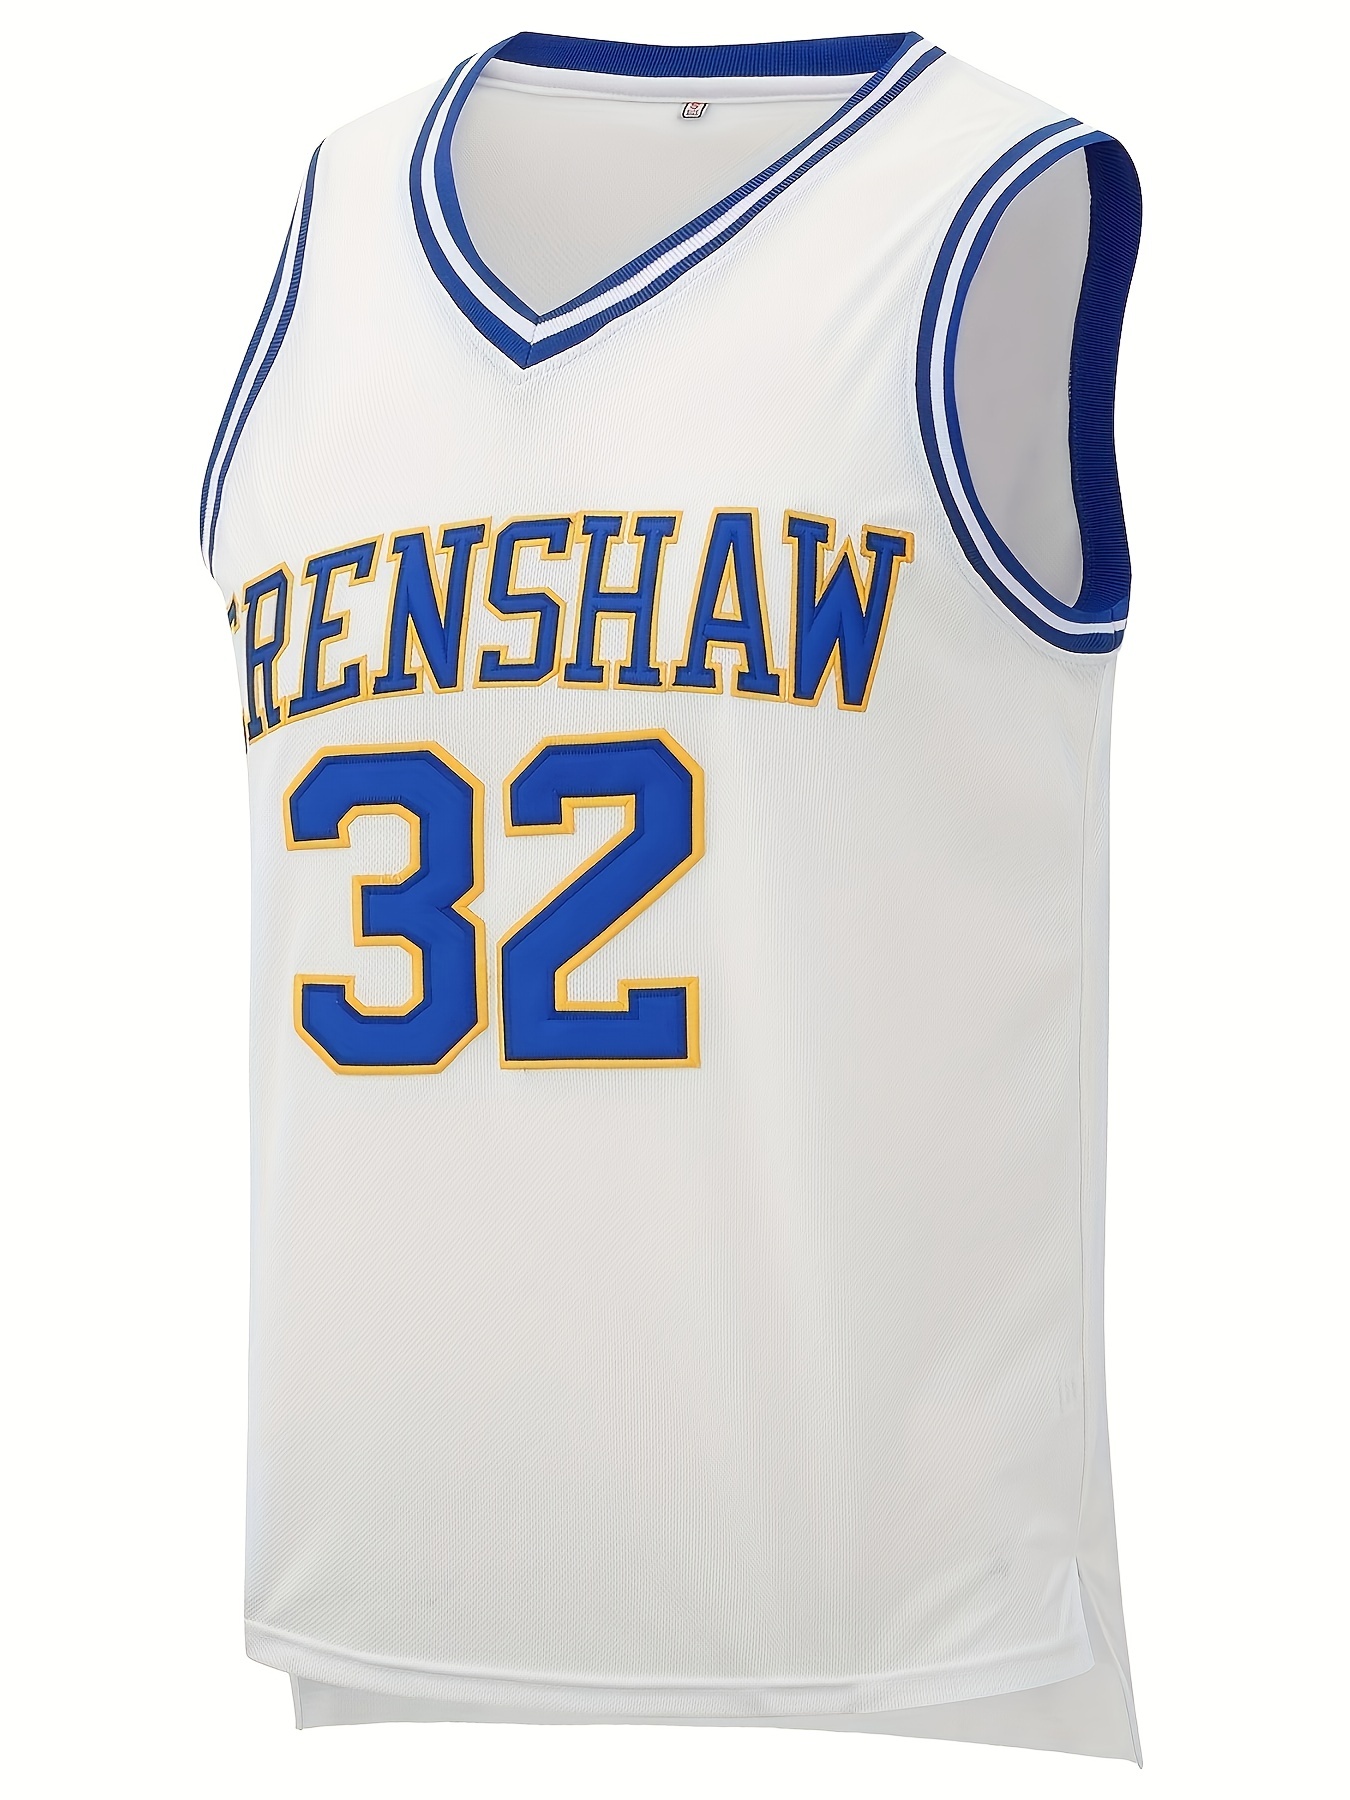 Crenshaw Basketball Uniform Full Set